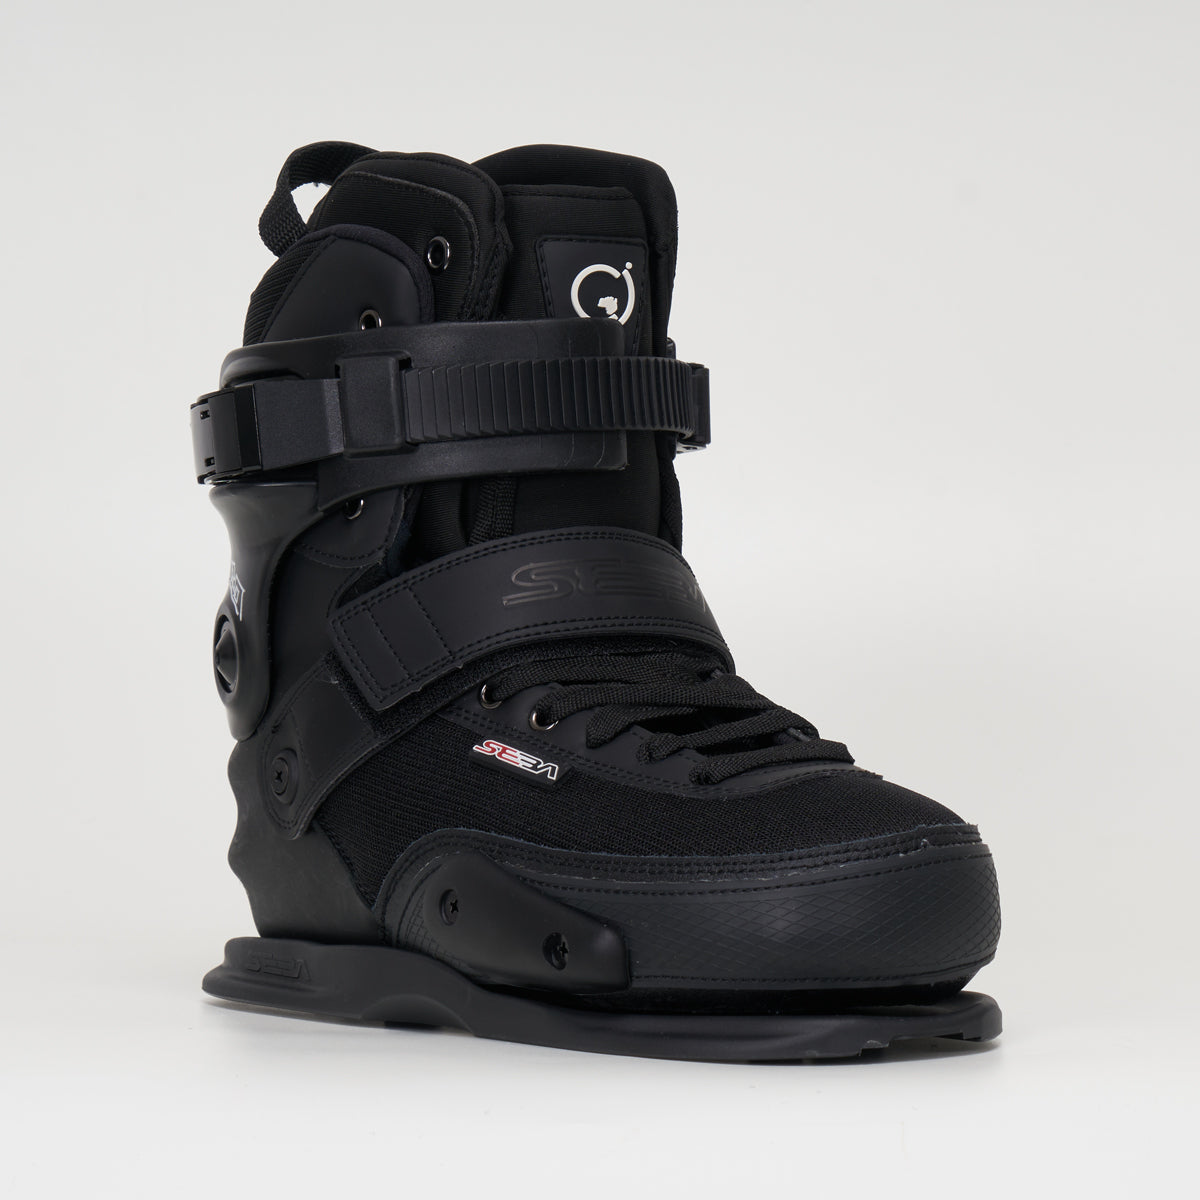 Seba CJ2 Prime Skates (Plastic version with removable liner) - Boot Only